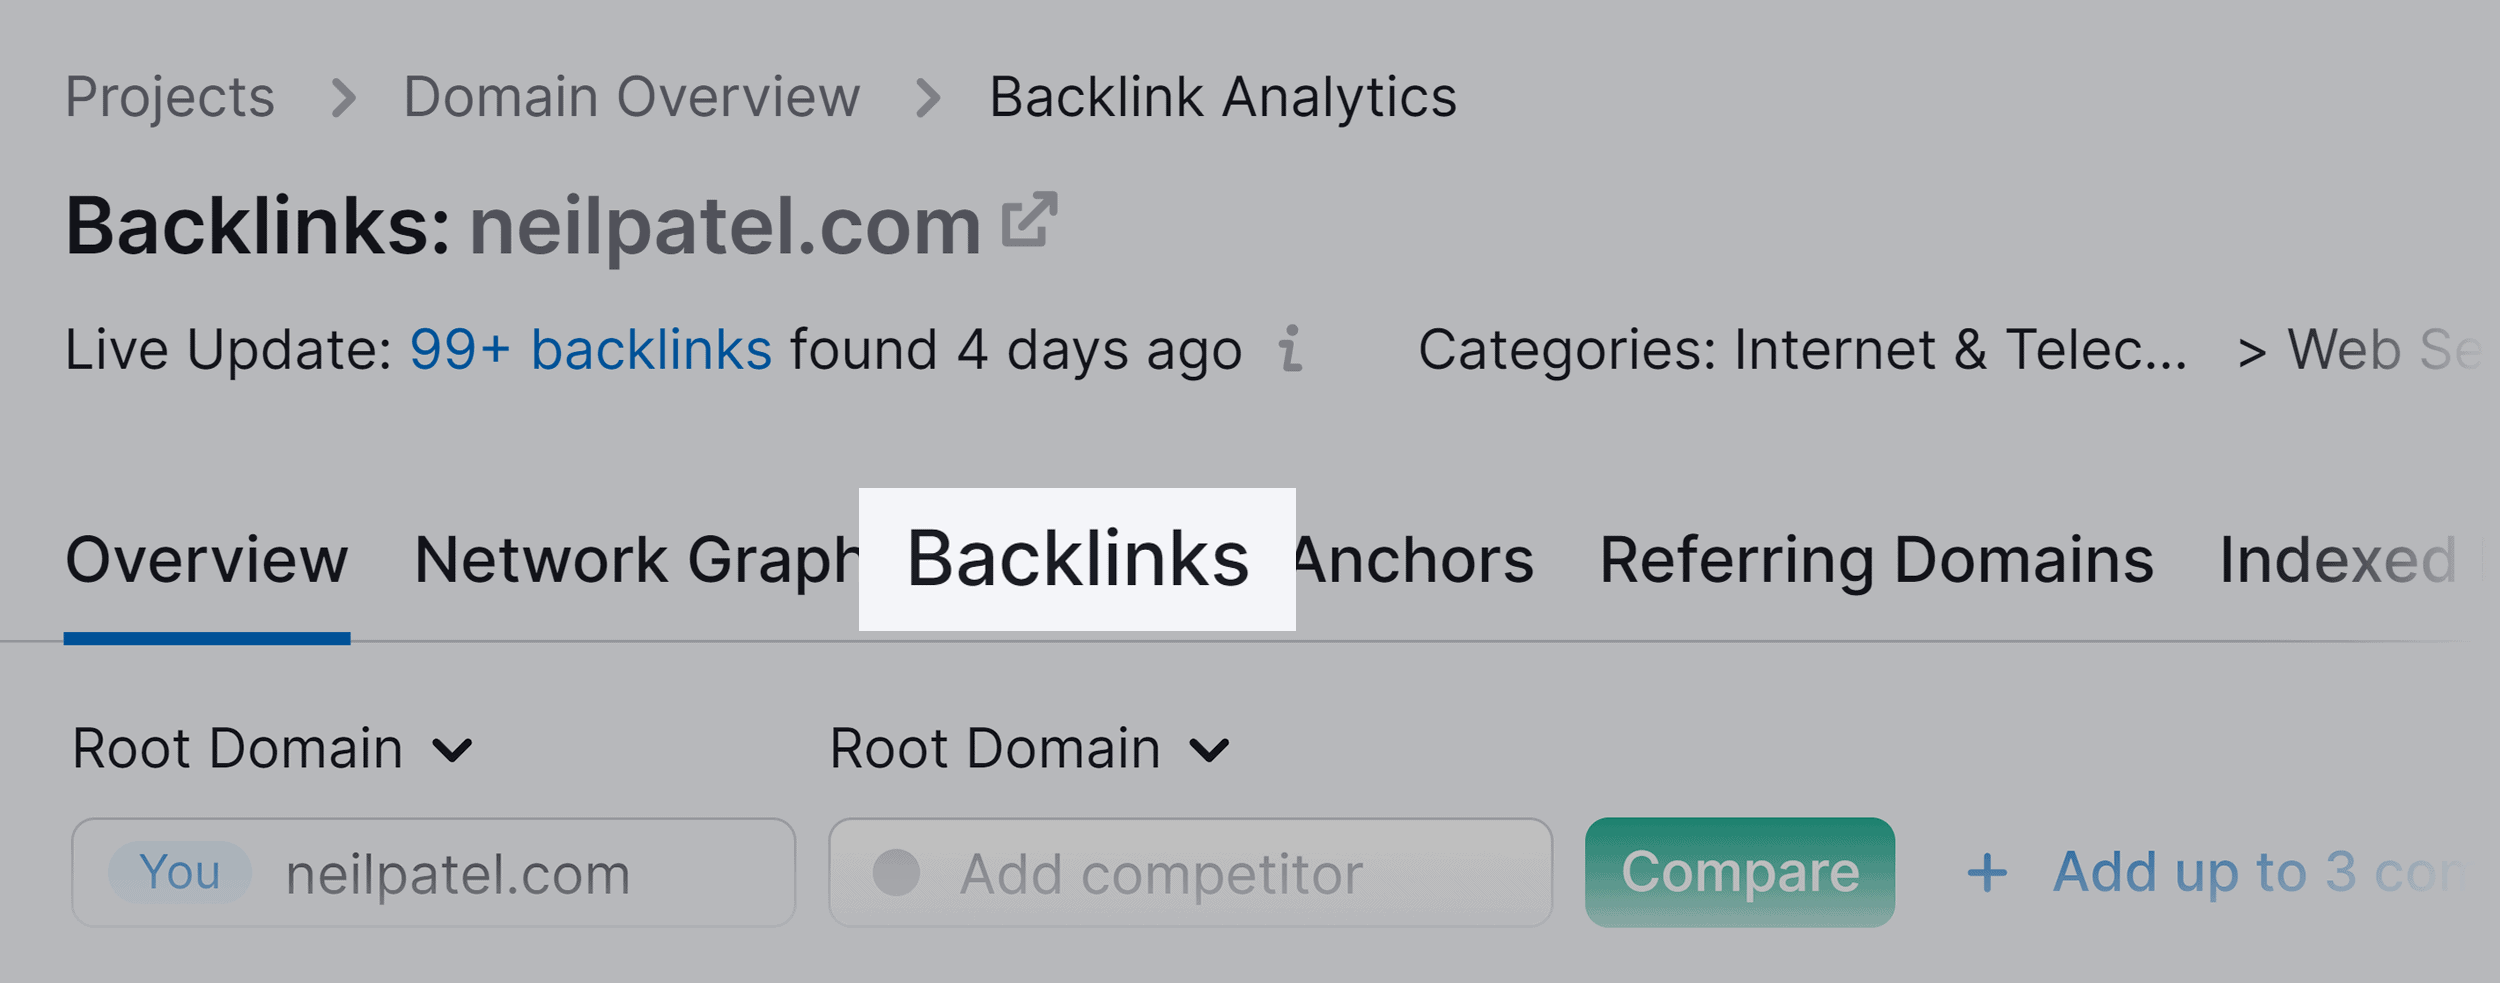 Backlink Analytics – Backlinks